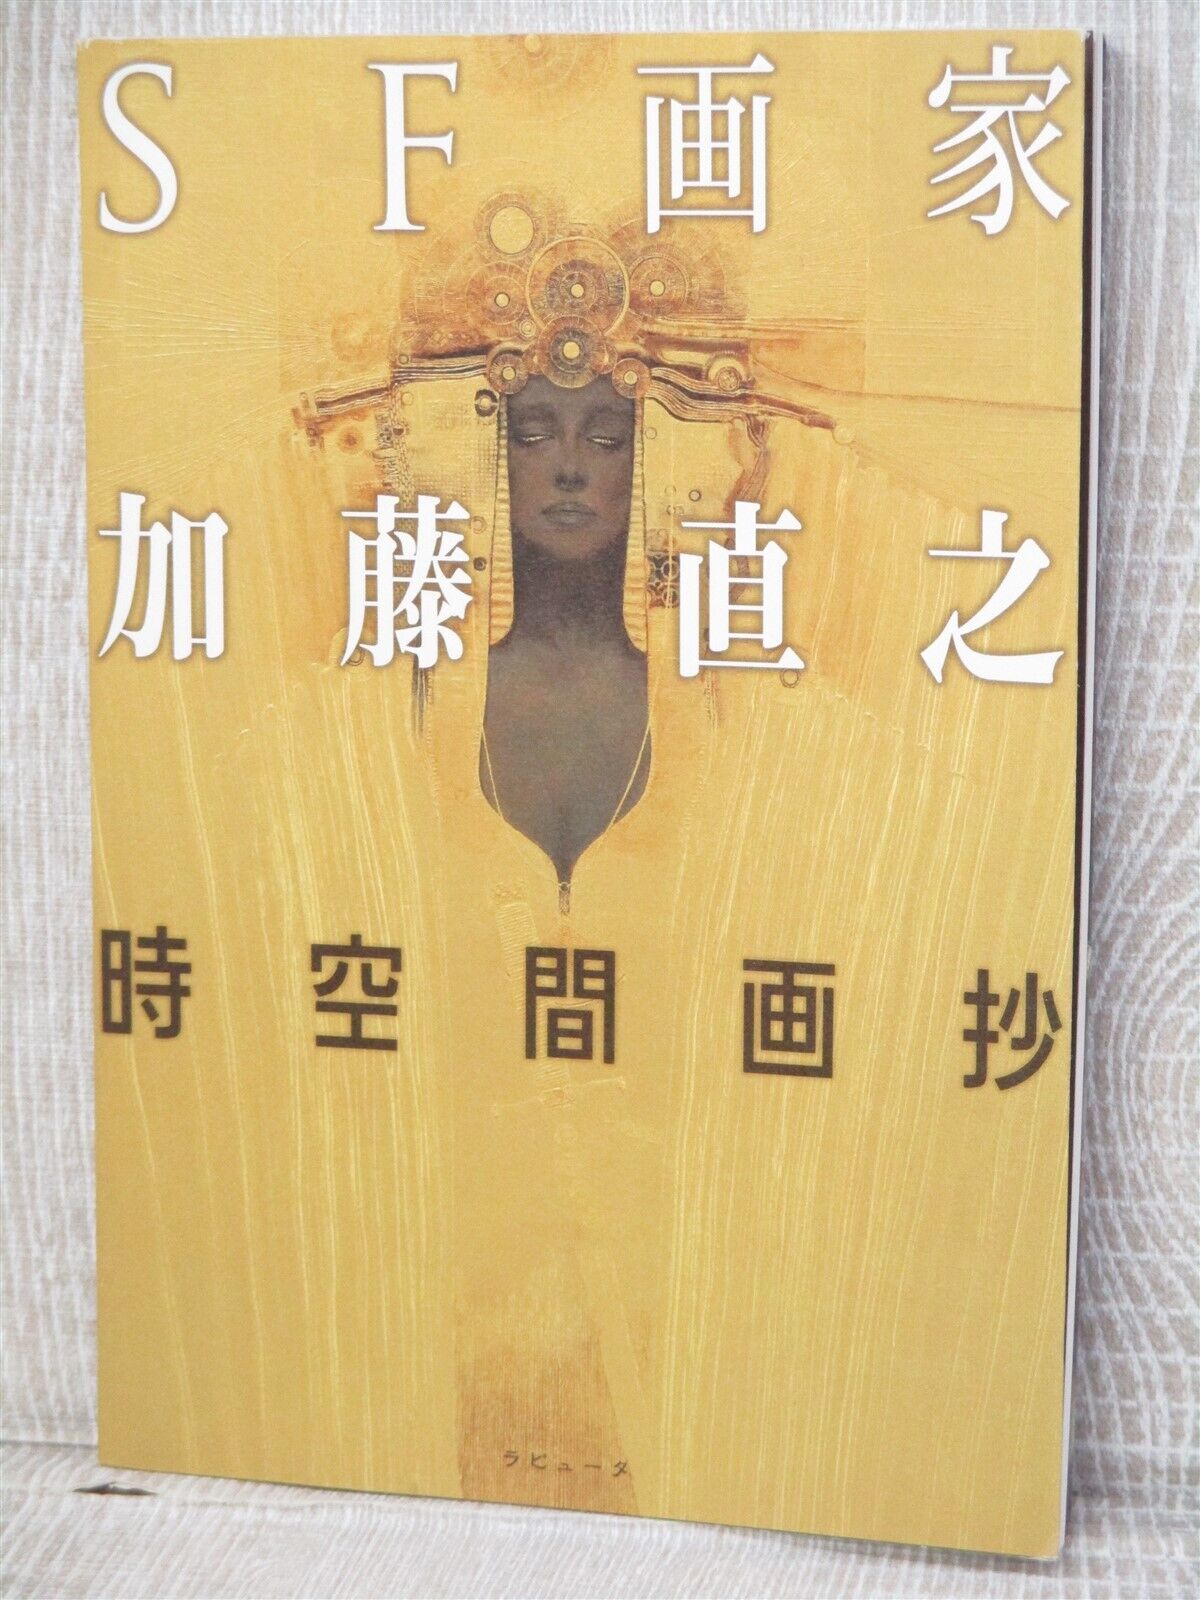 NAOYUKI KATOH Kato SF Art Works JIKUHKAN GASHO Jikukan Book Japan 2007